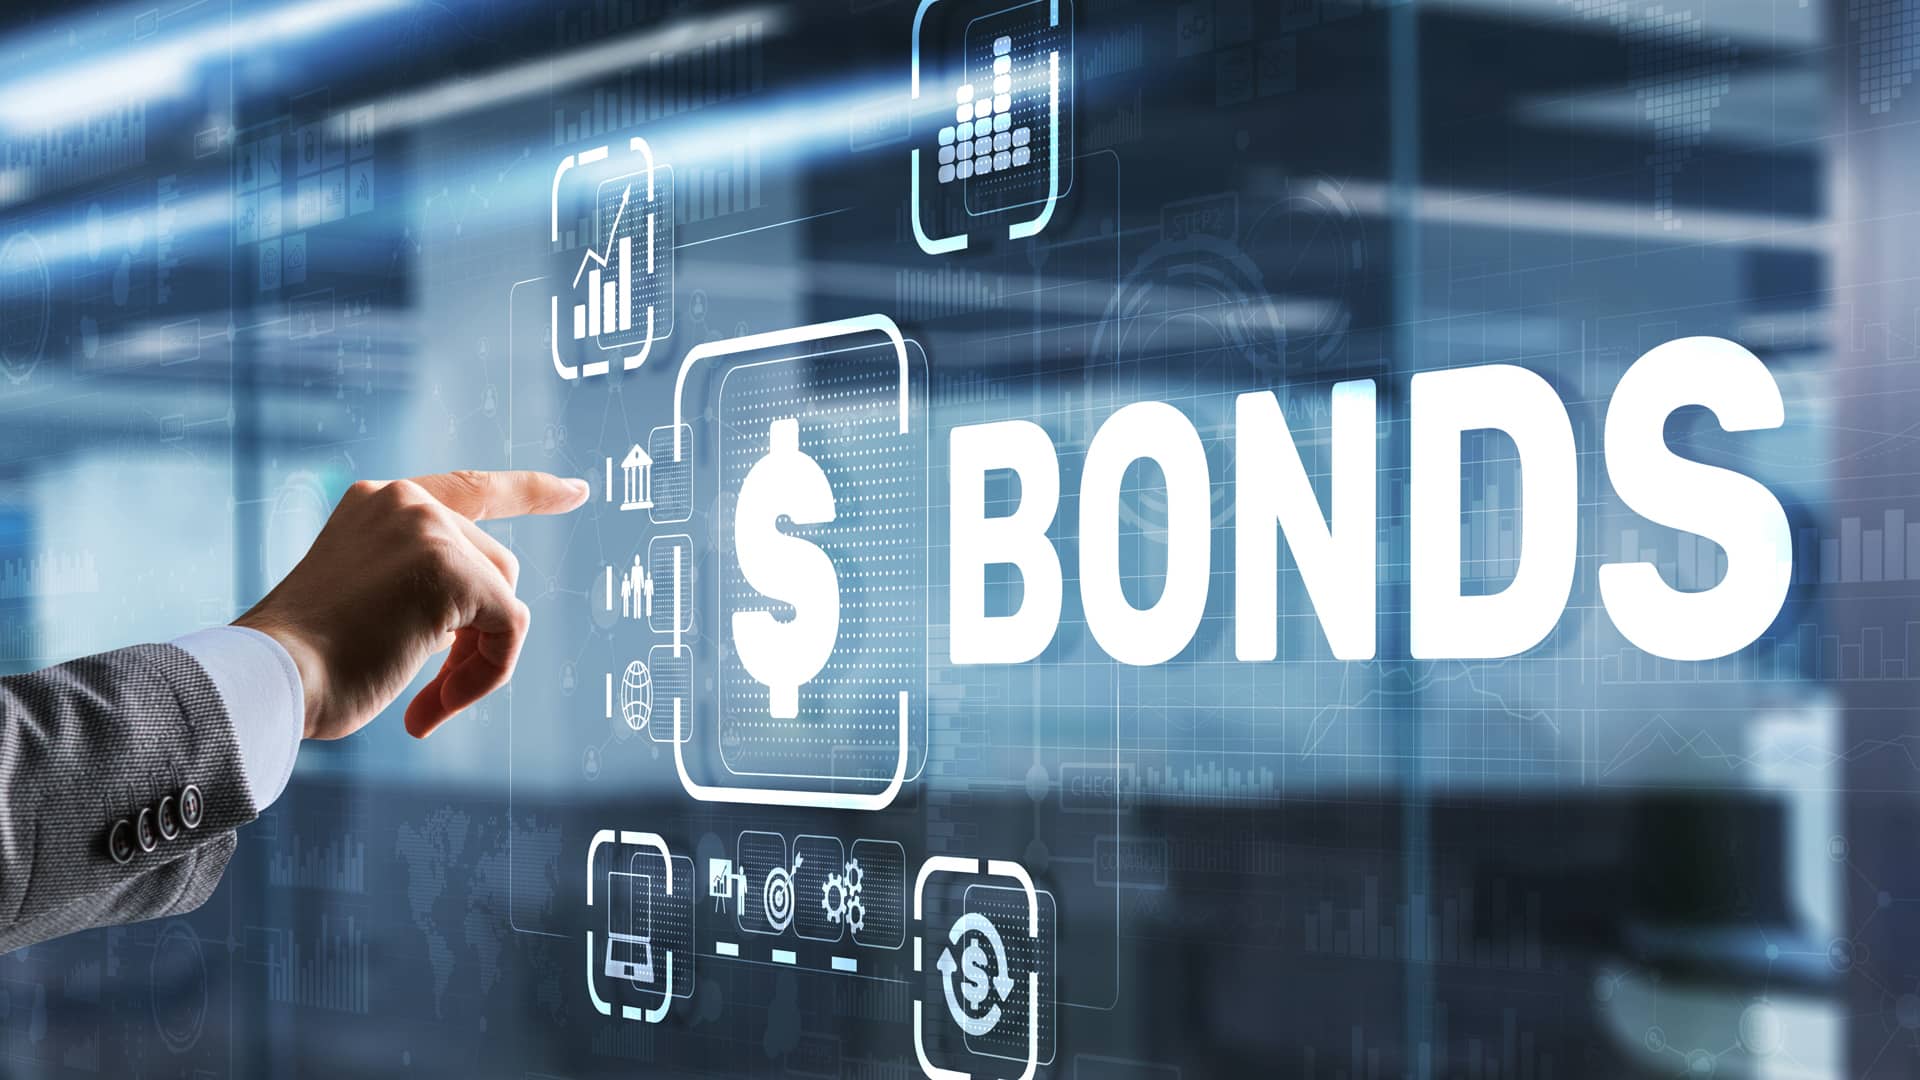 SBI board approves raising Rs 10,000 crore capital via bonds